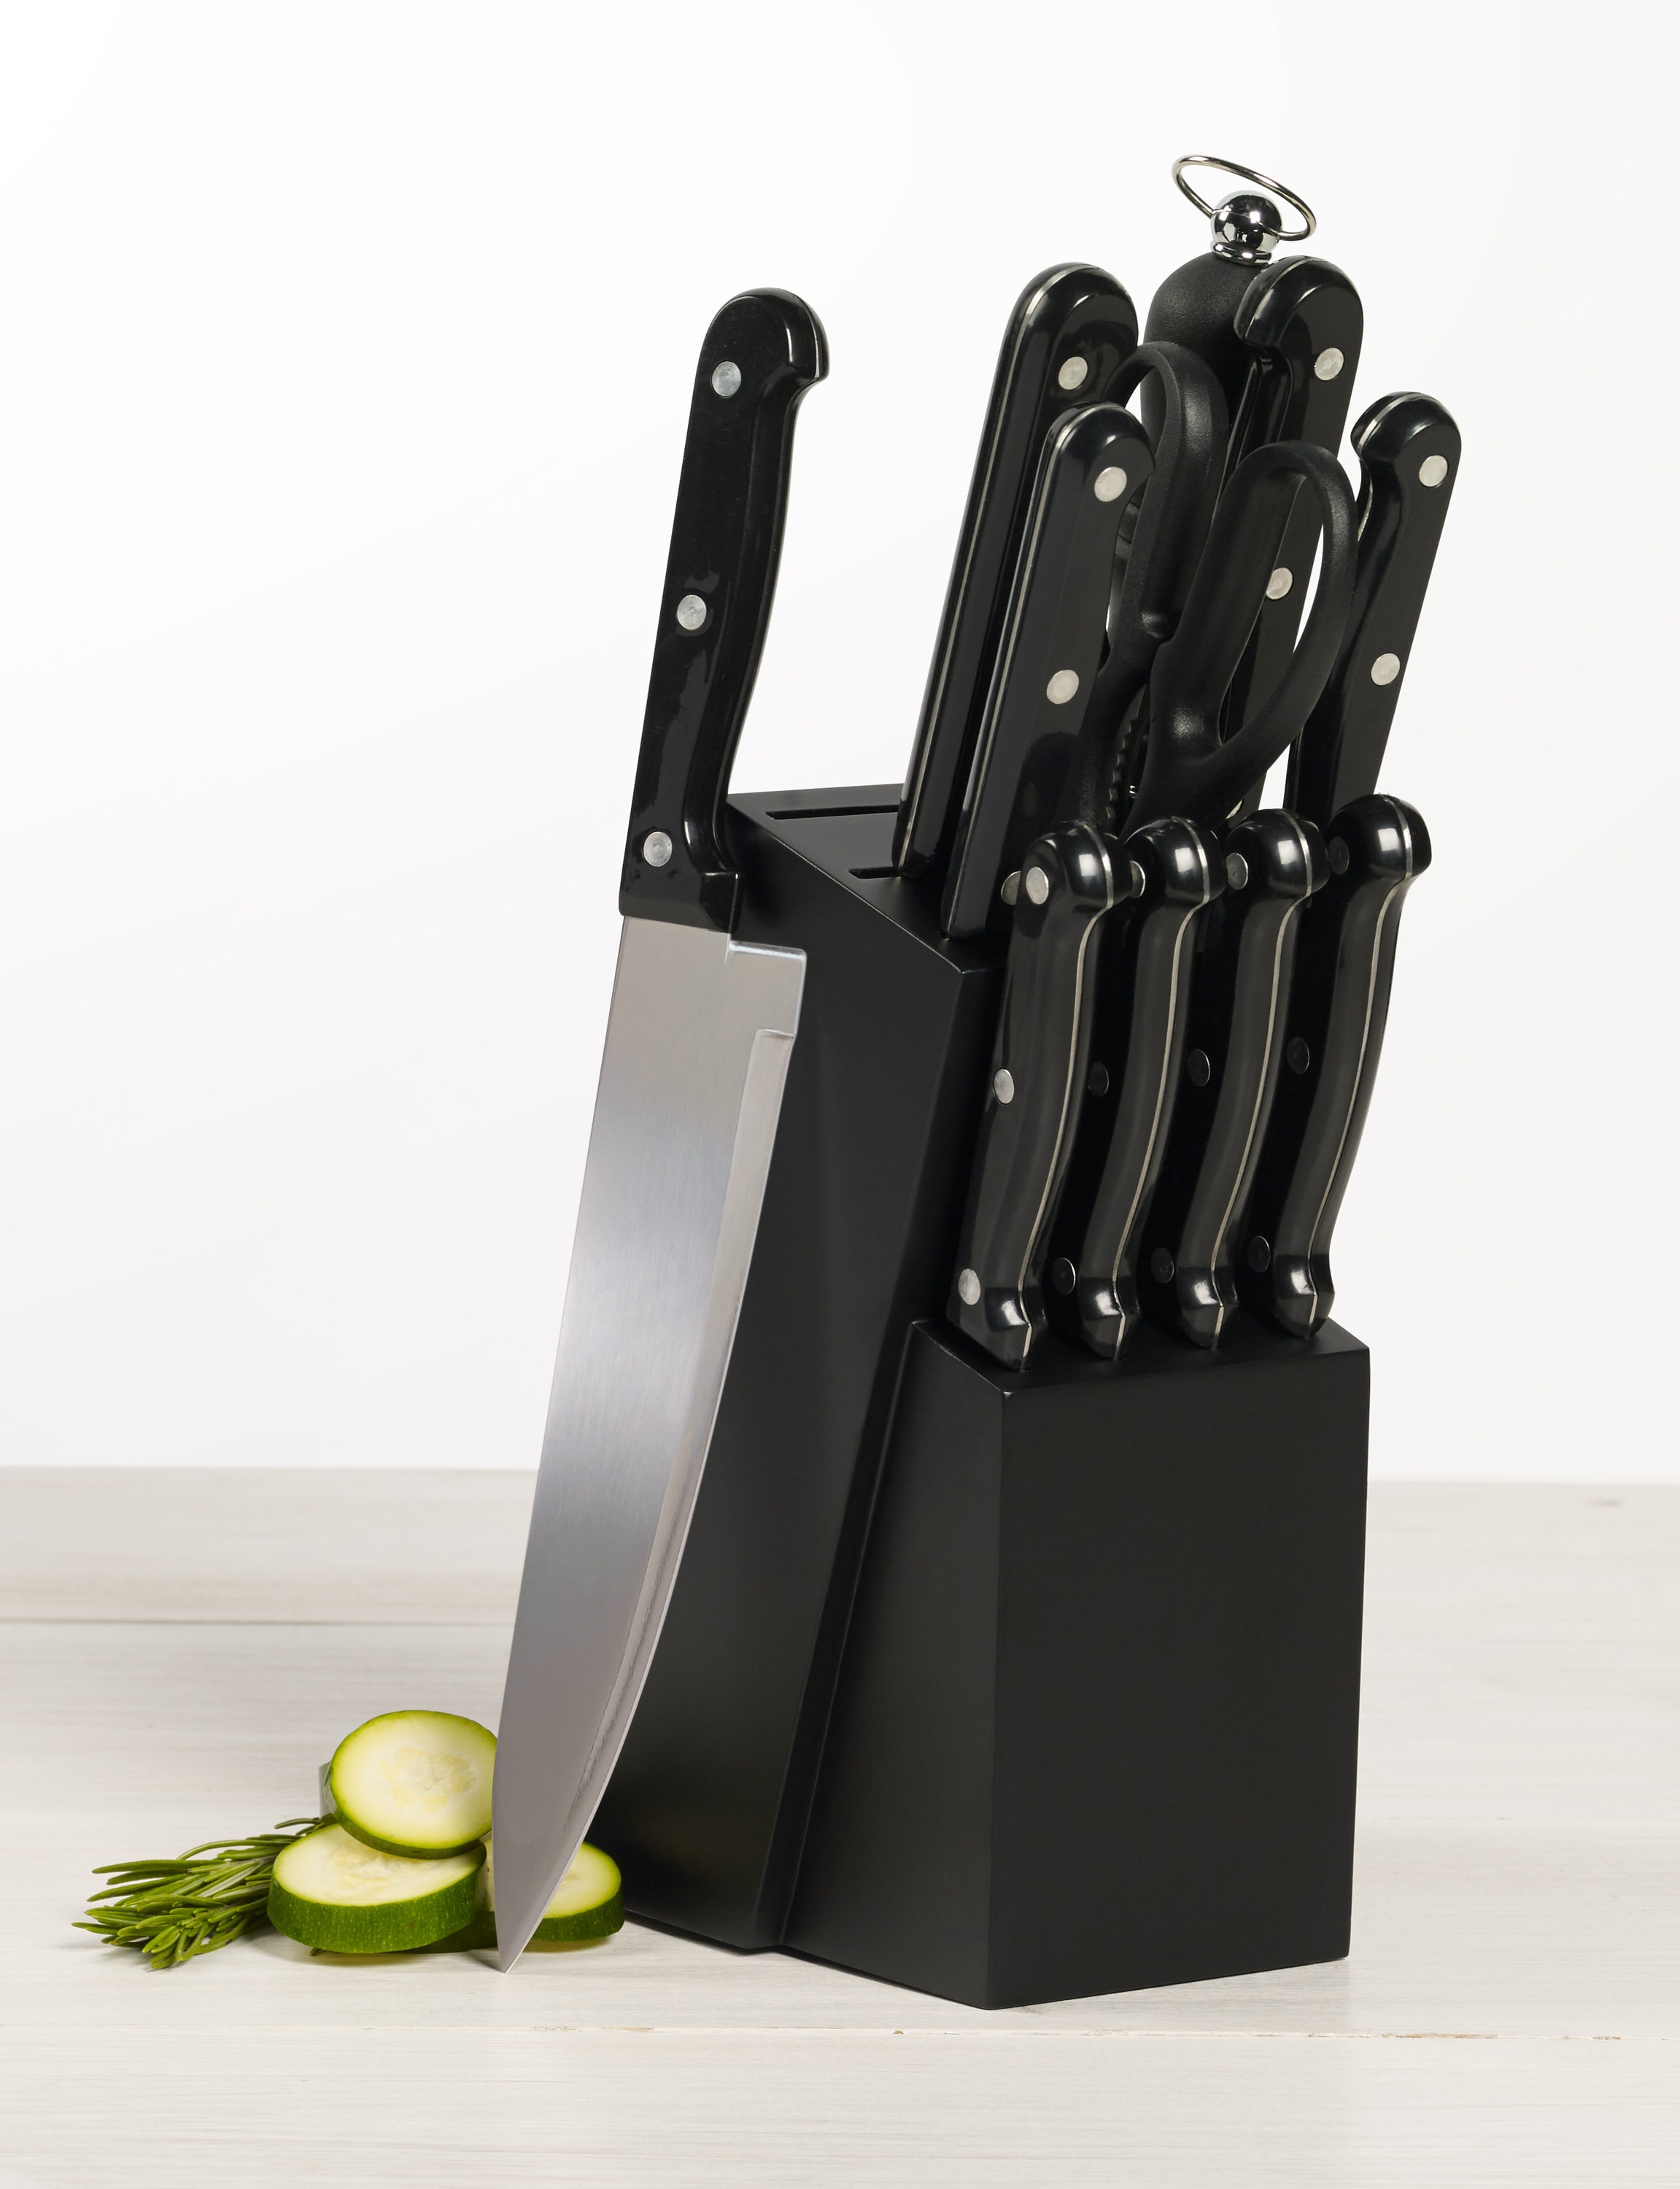 EatNeat 12-PC Black Knife Set, 5 SS Knives w/Sheaths, Cutting